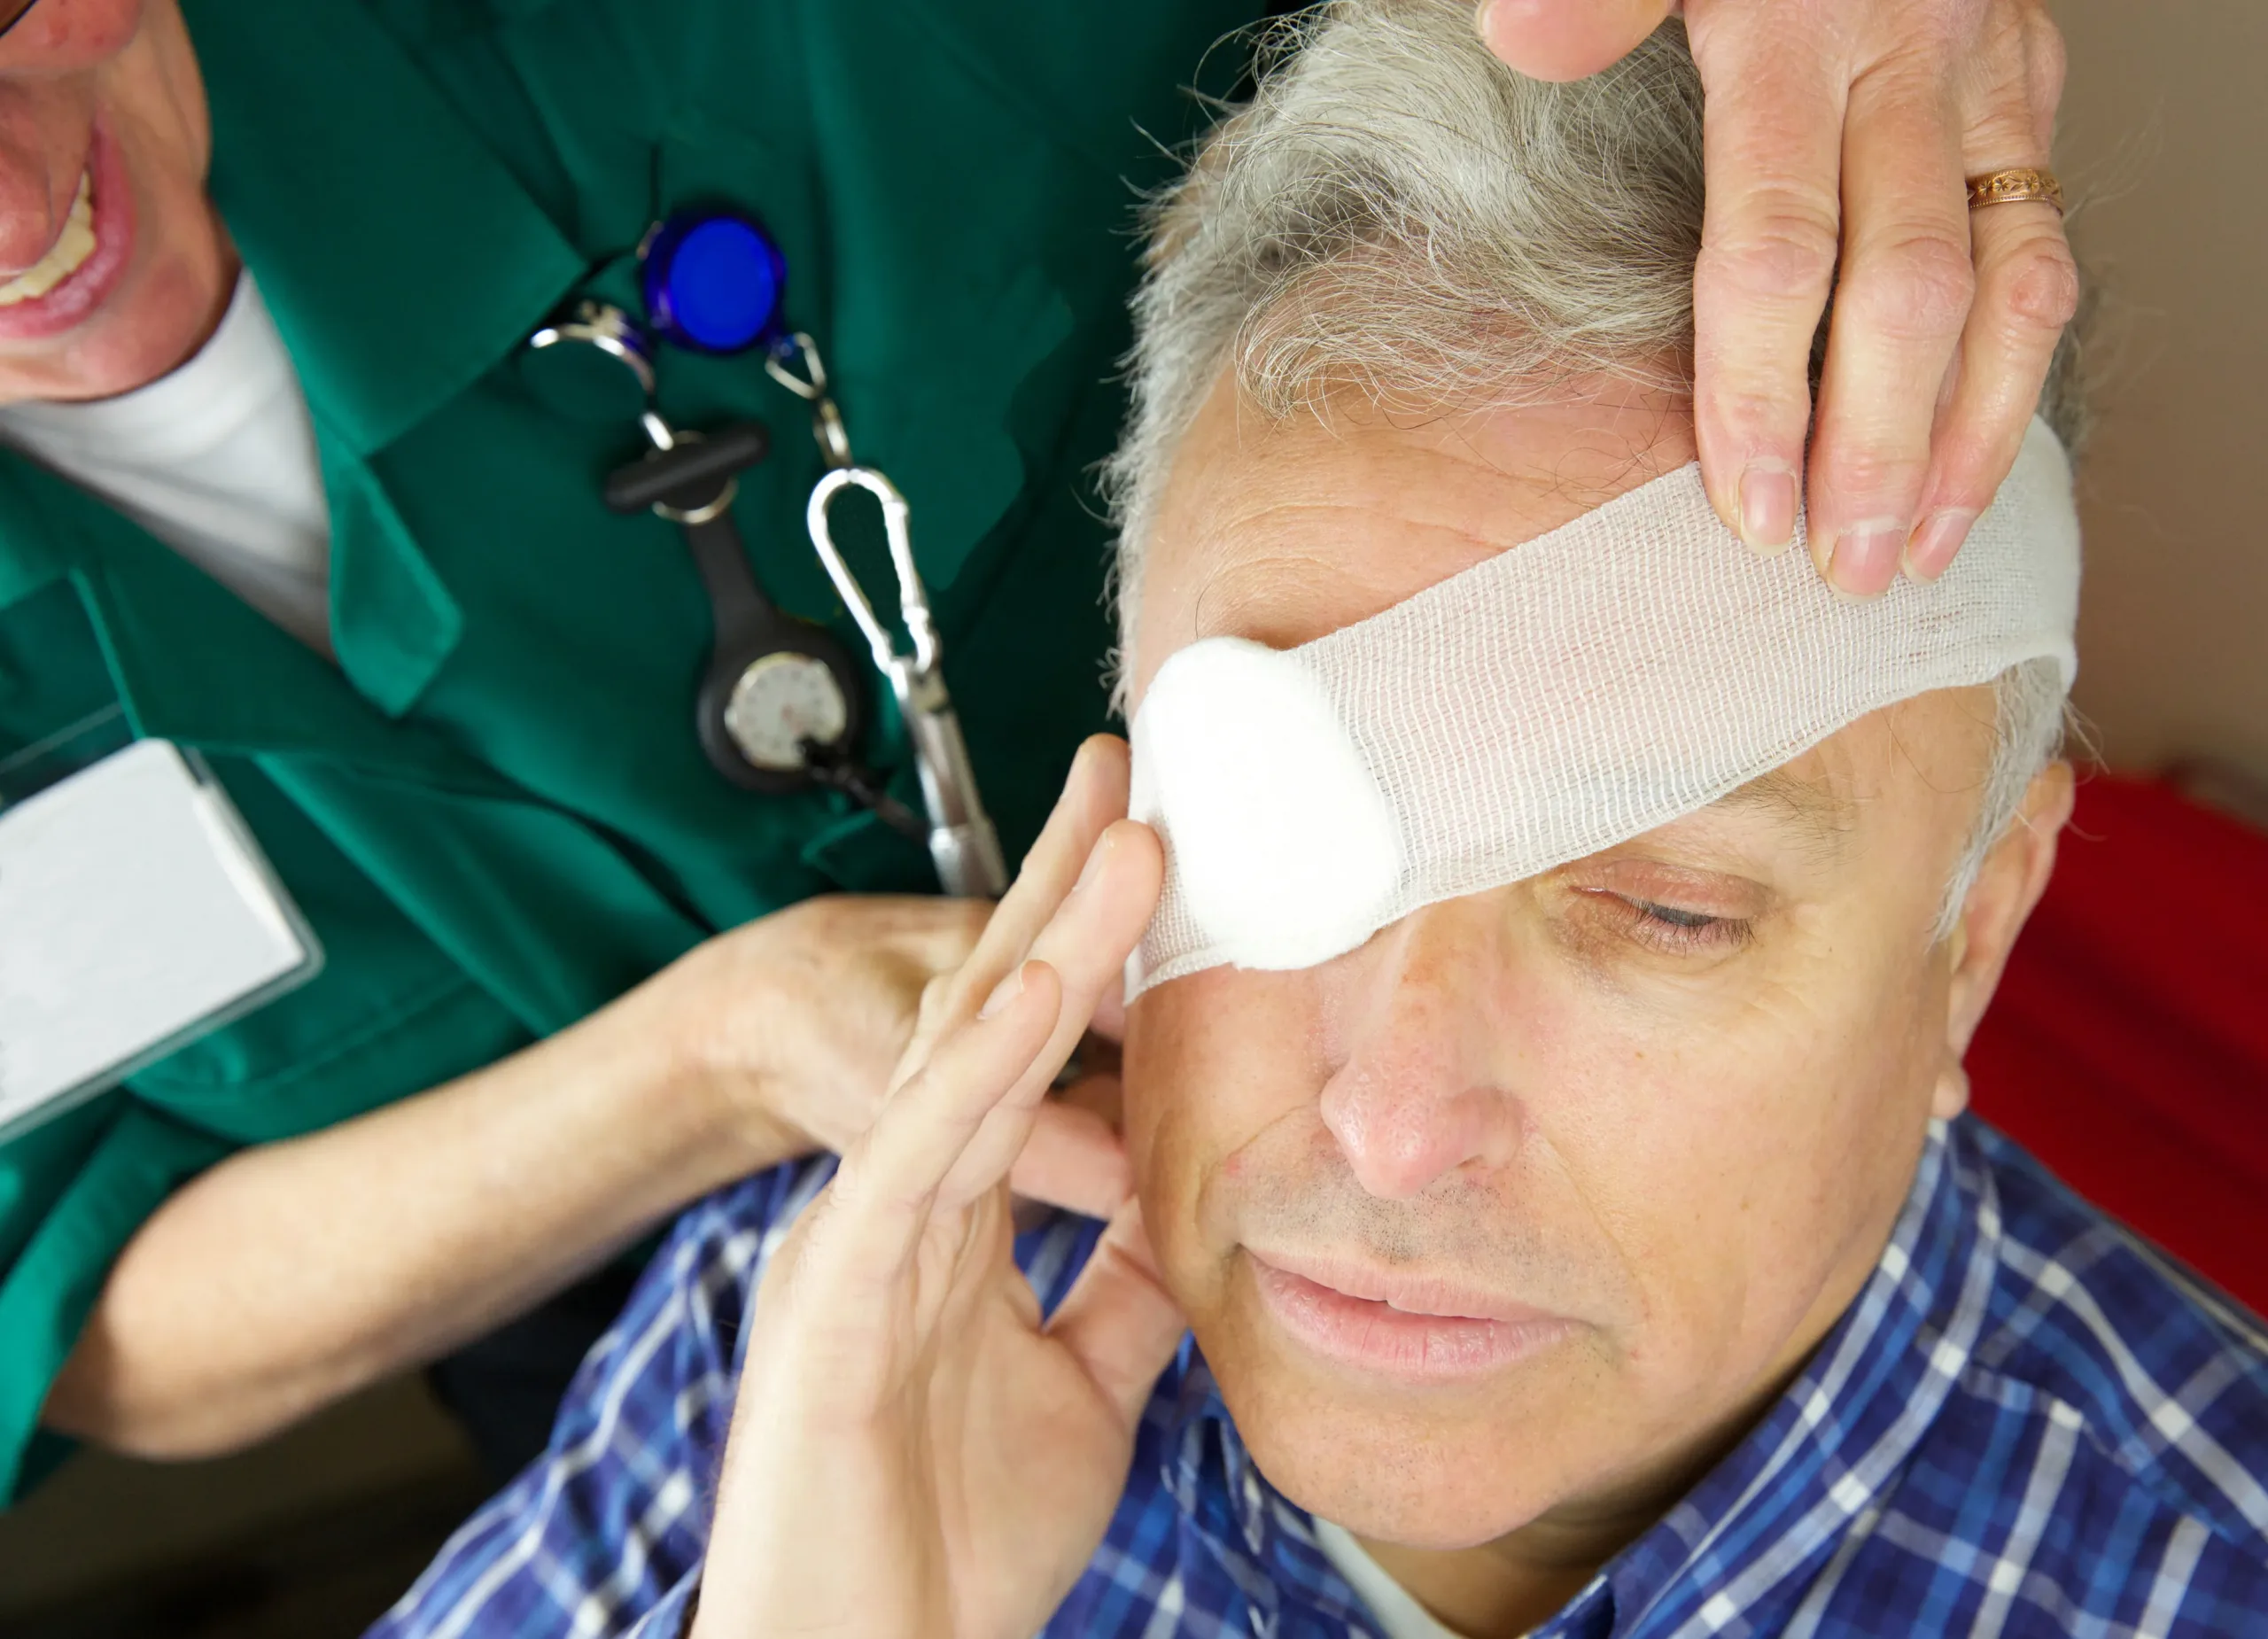 Man receives emergency eye care